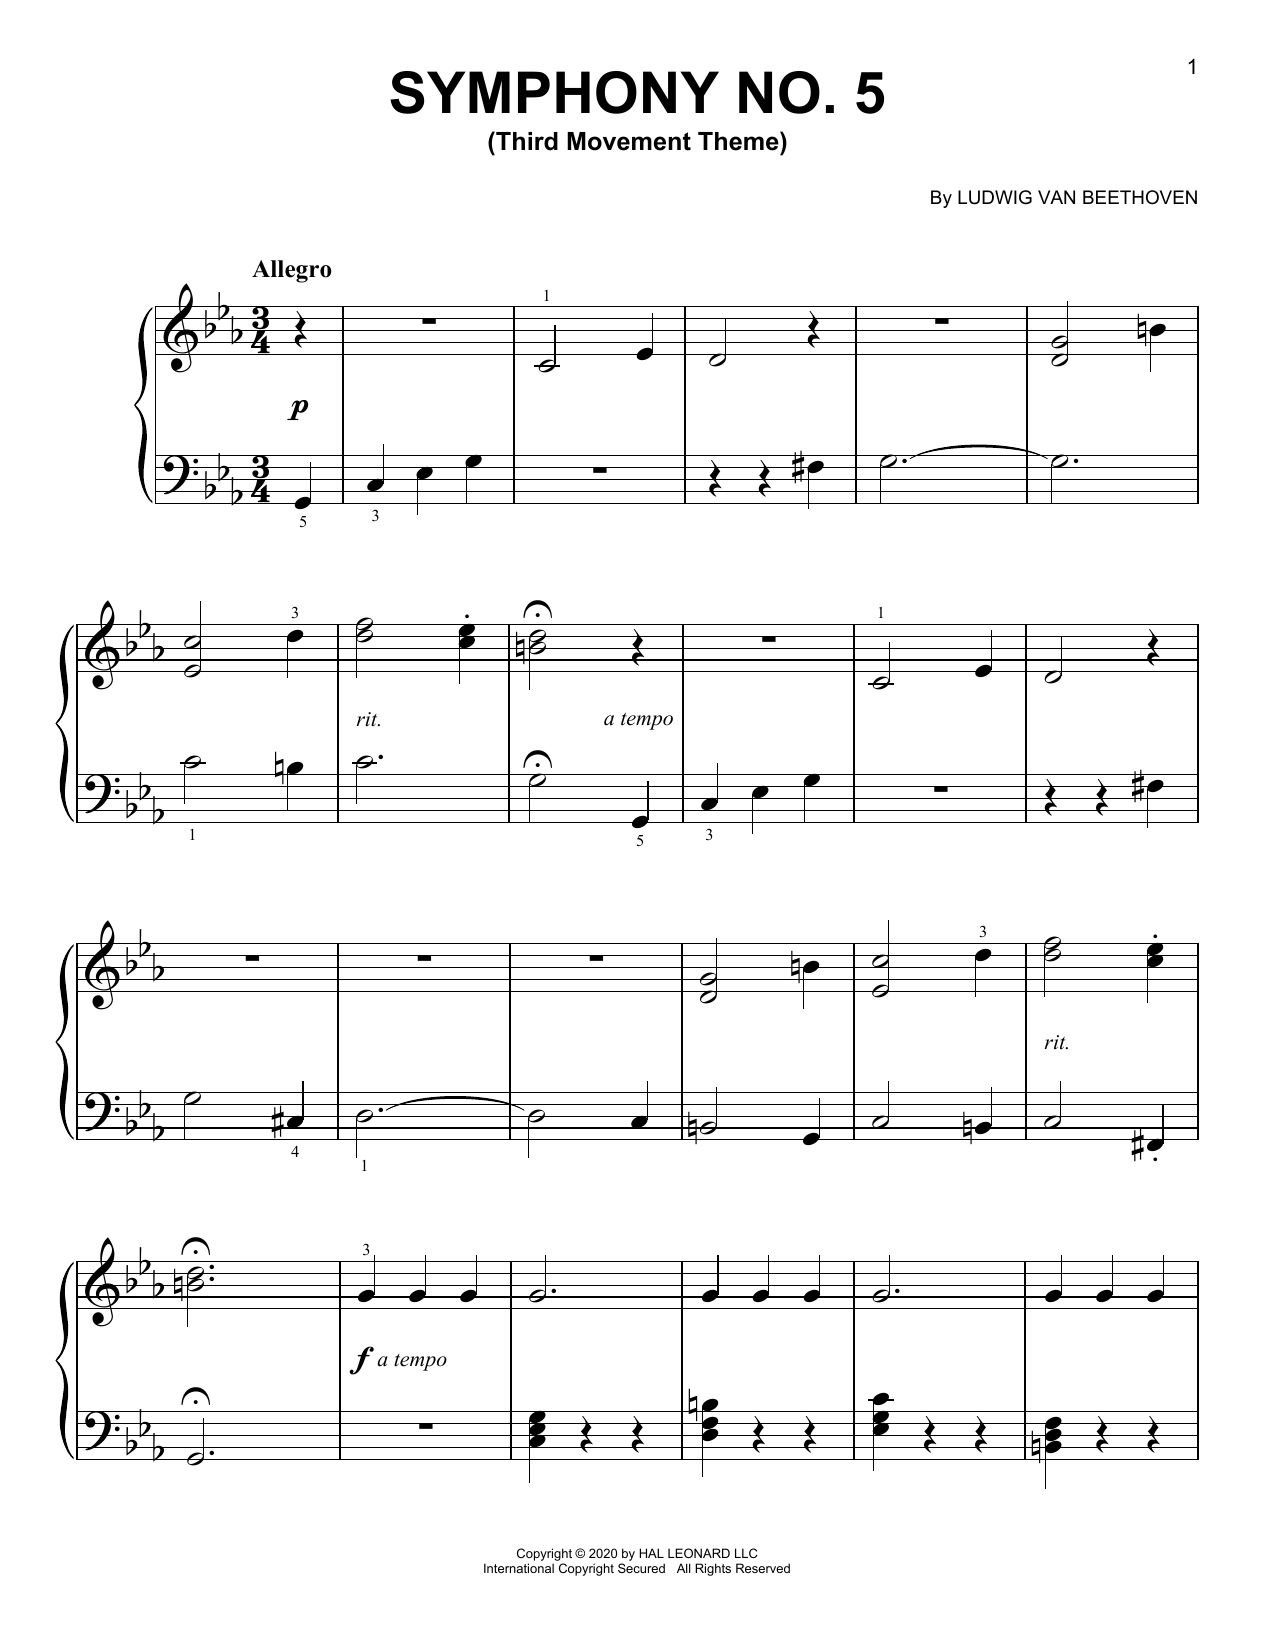 Ludwig van Beethoven Symphony No. 5, Third Movement Excerpt sheet music notes printable PDF score